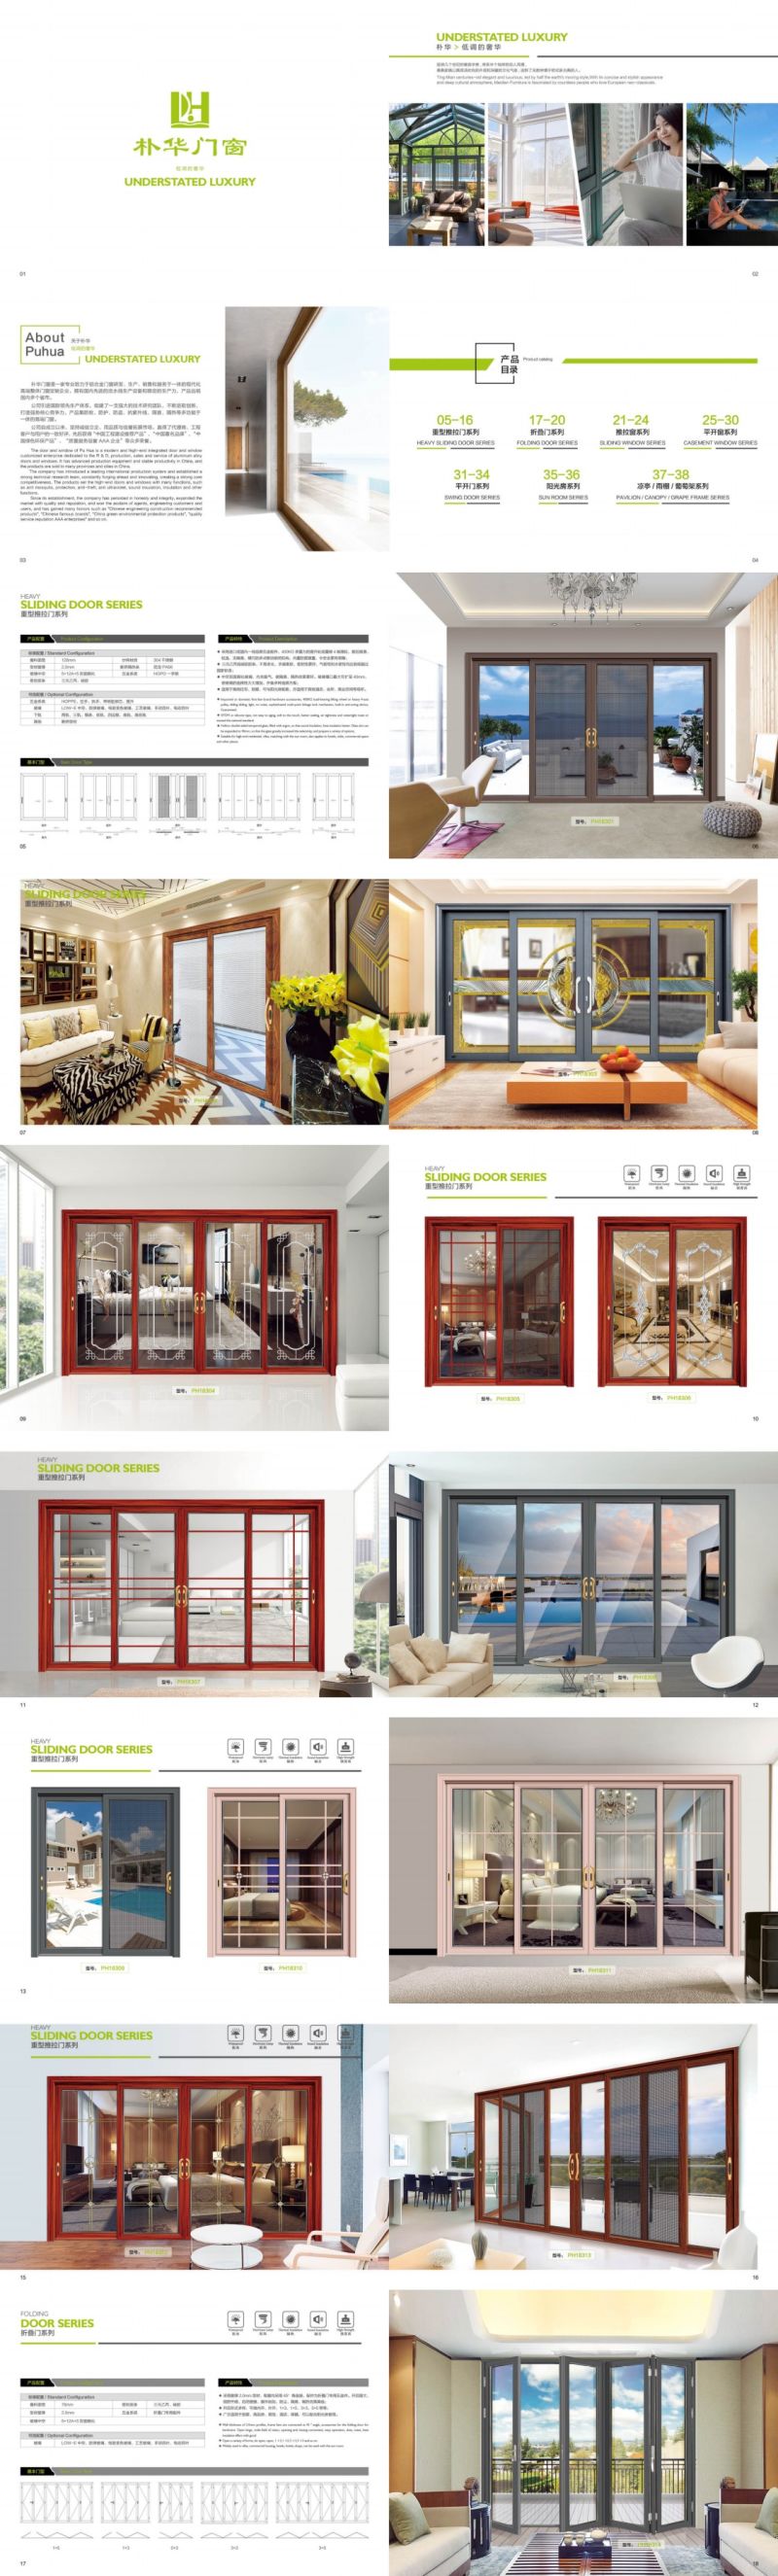 Aluminium Sliding Interior Doors for Home Villa Projects